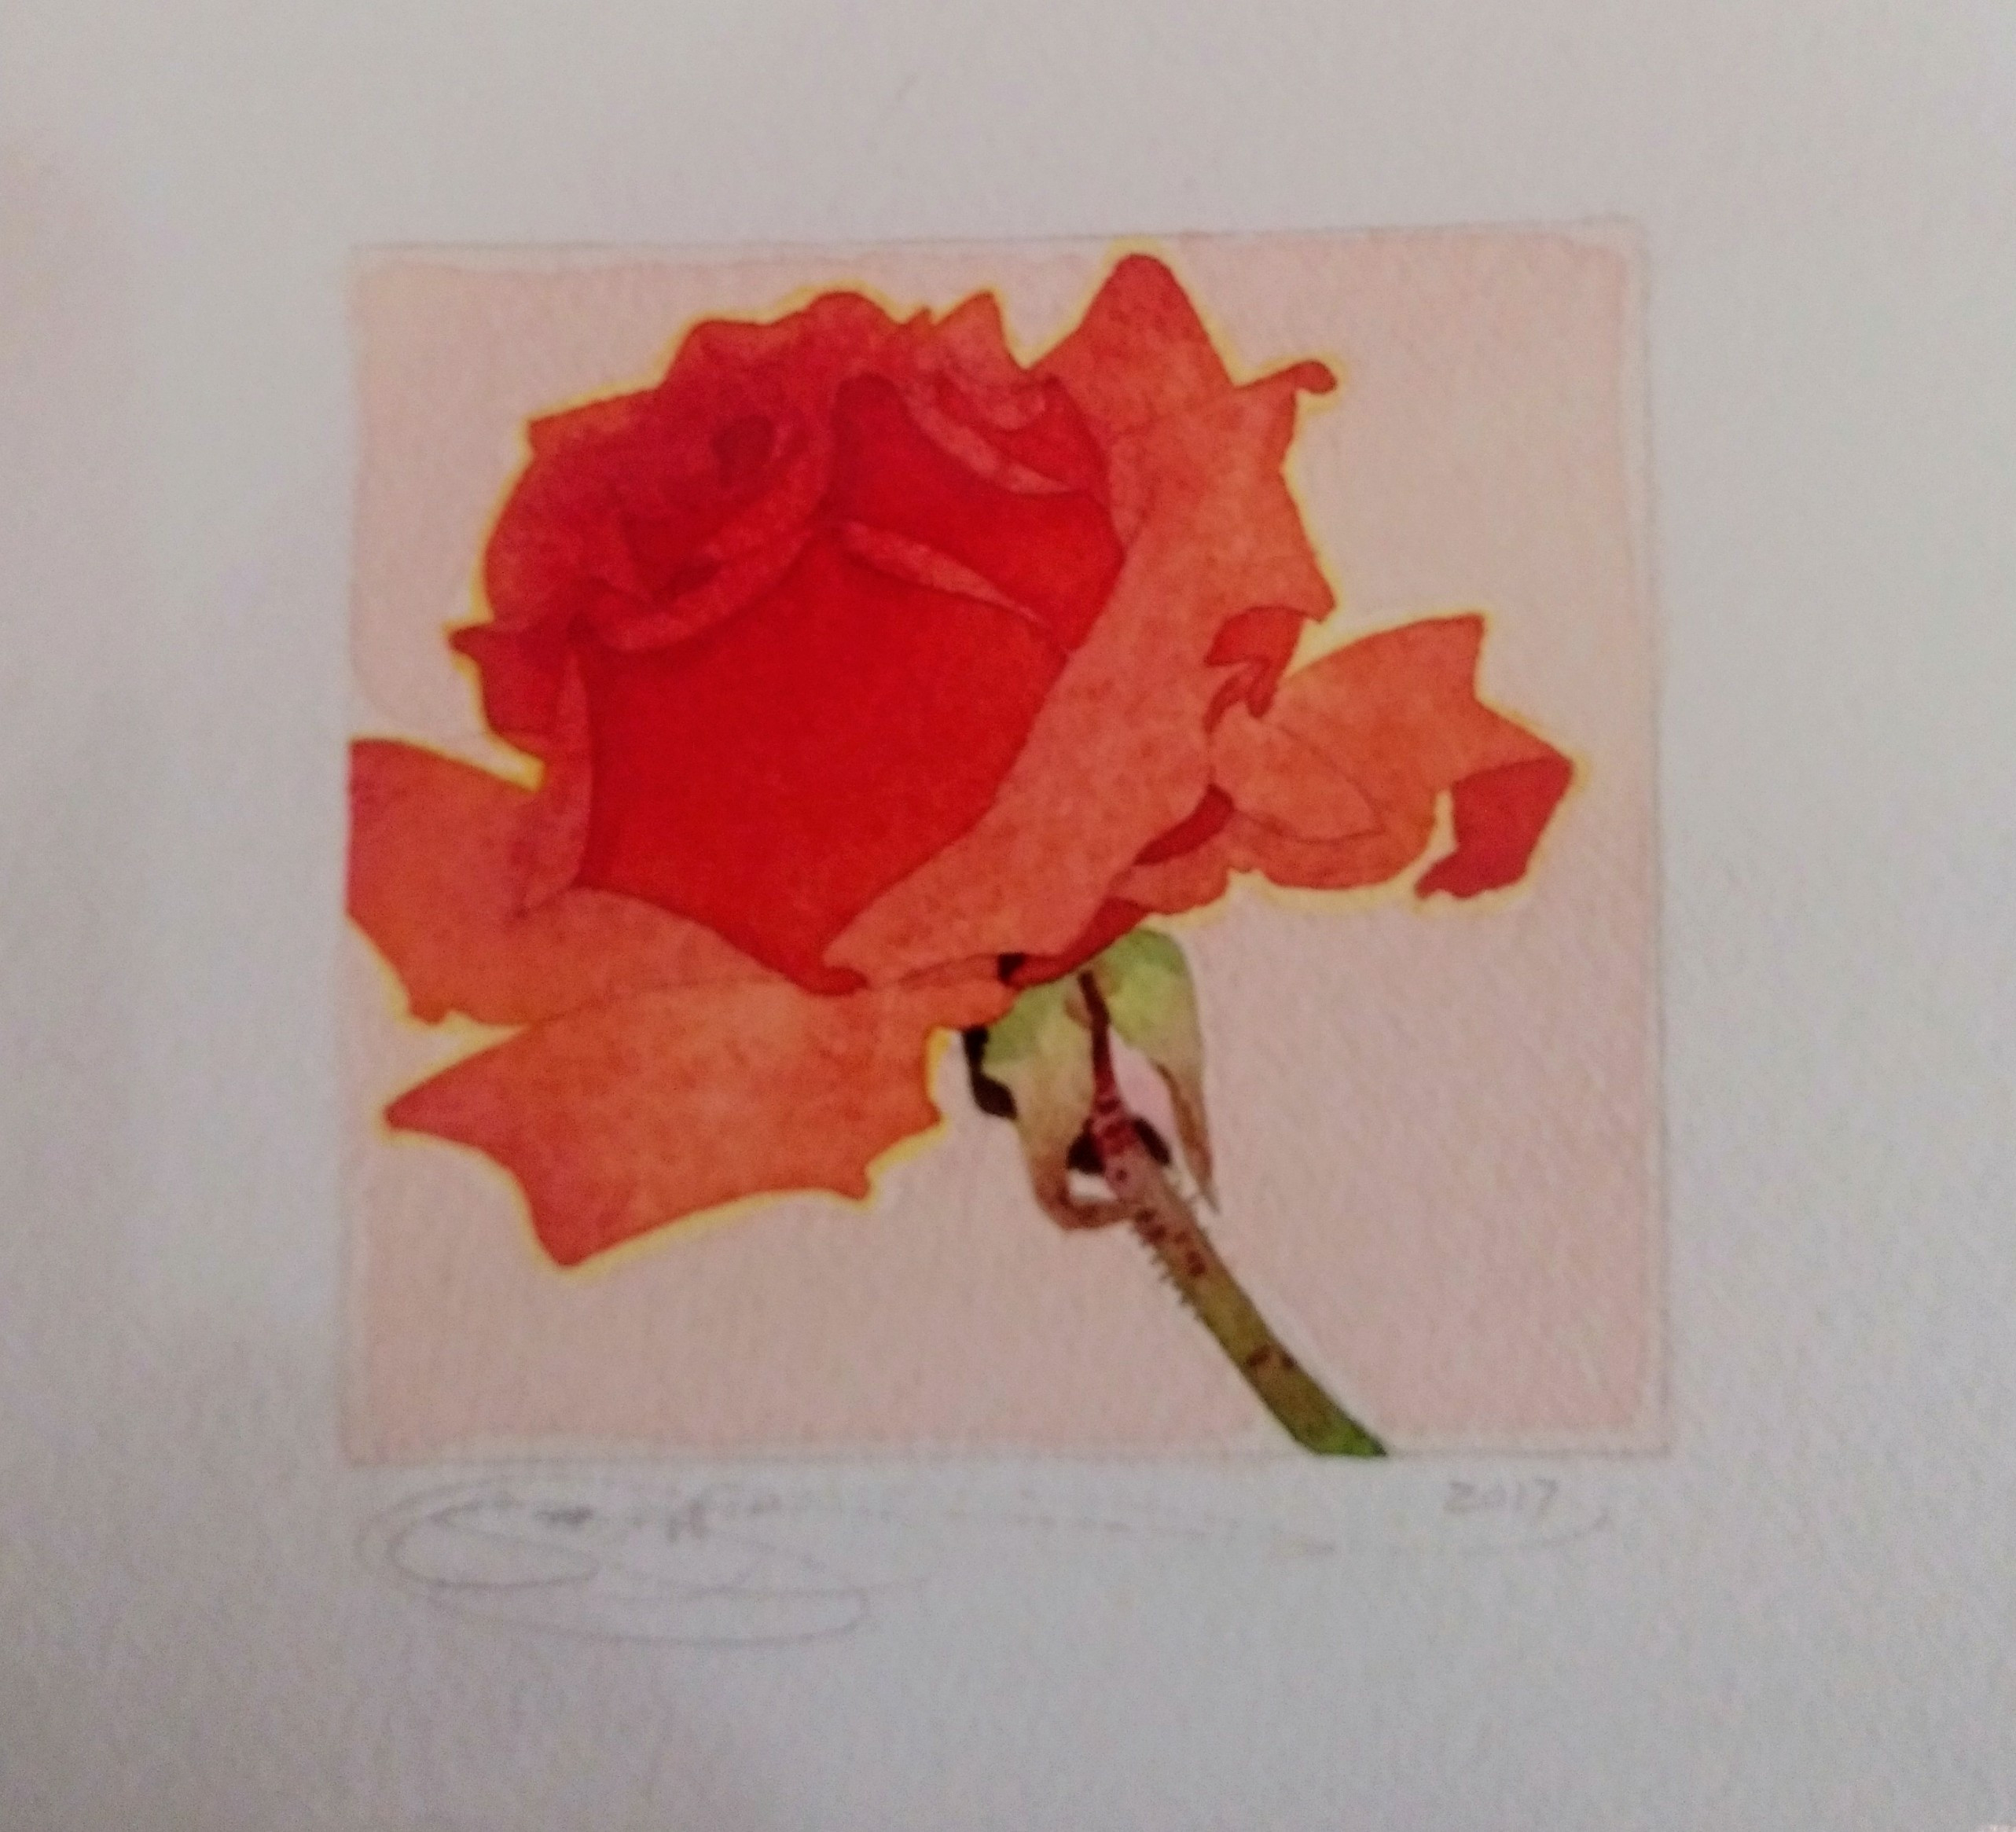 Red Rose Study, 2018